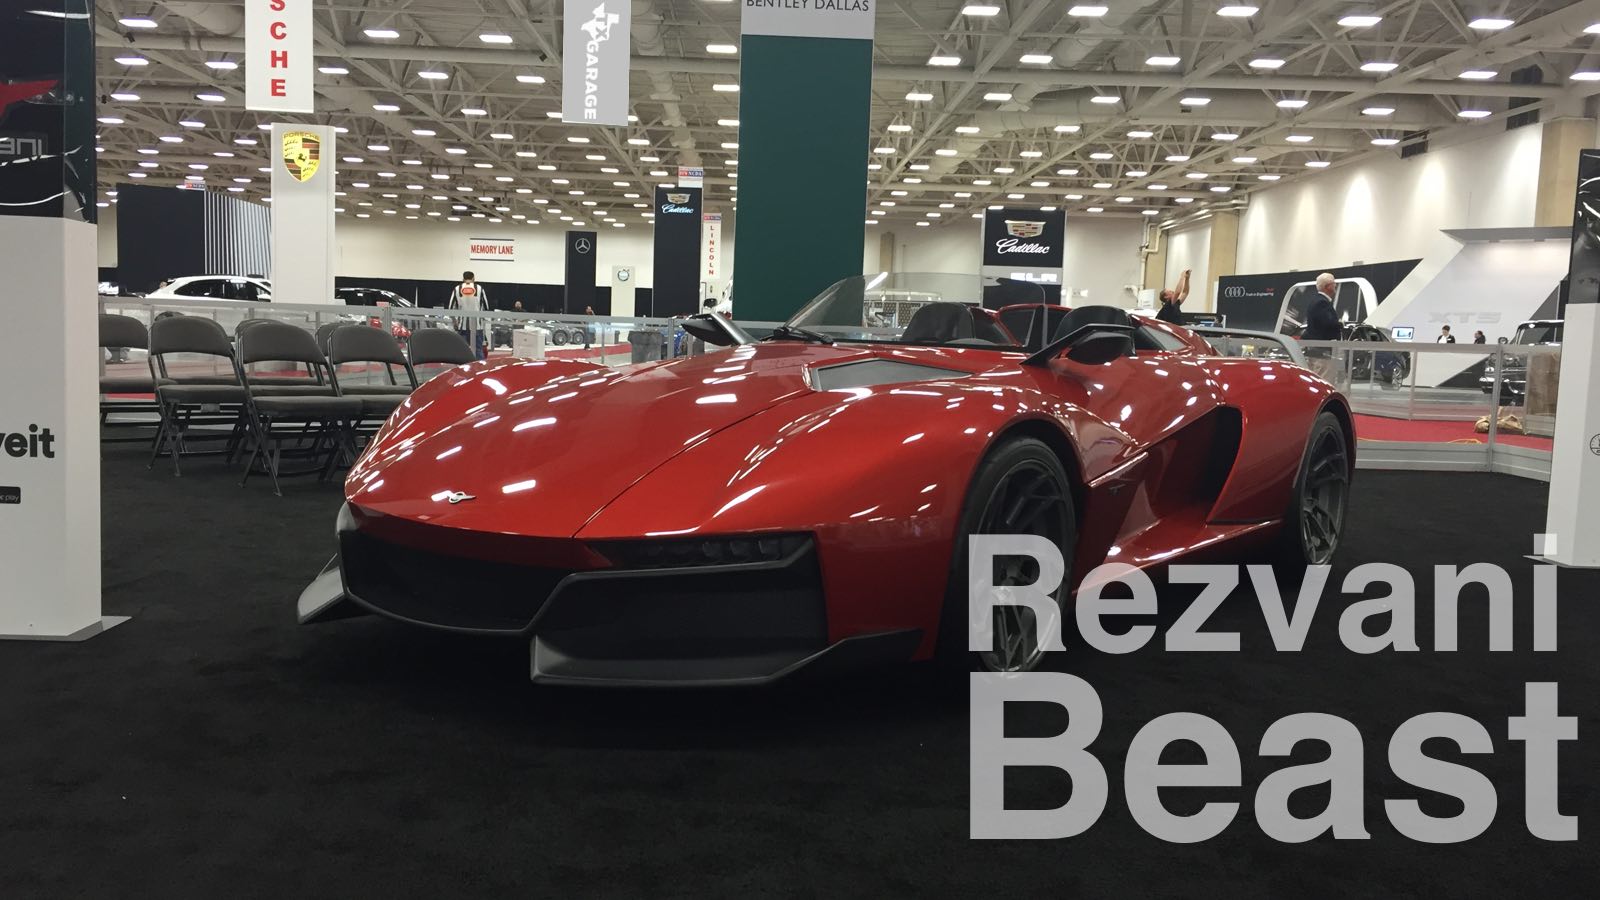 The Rezvani Beast at the DFW Auto Show